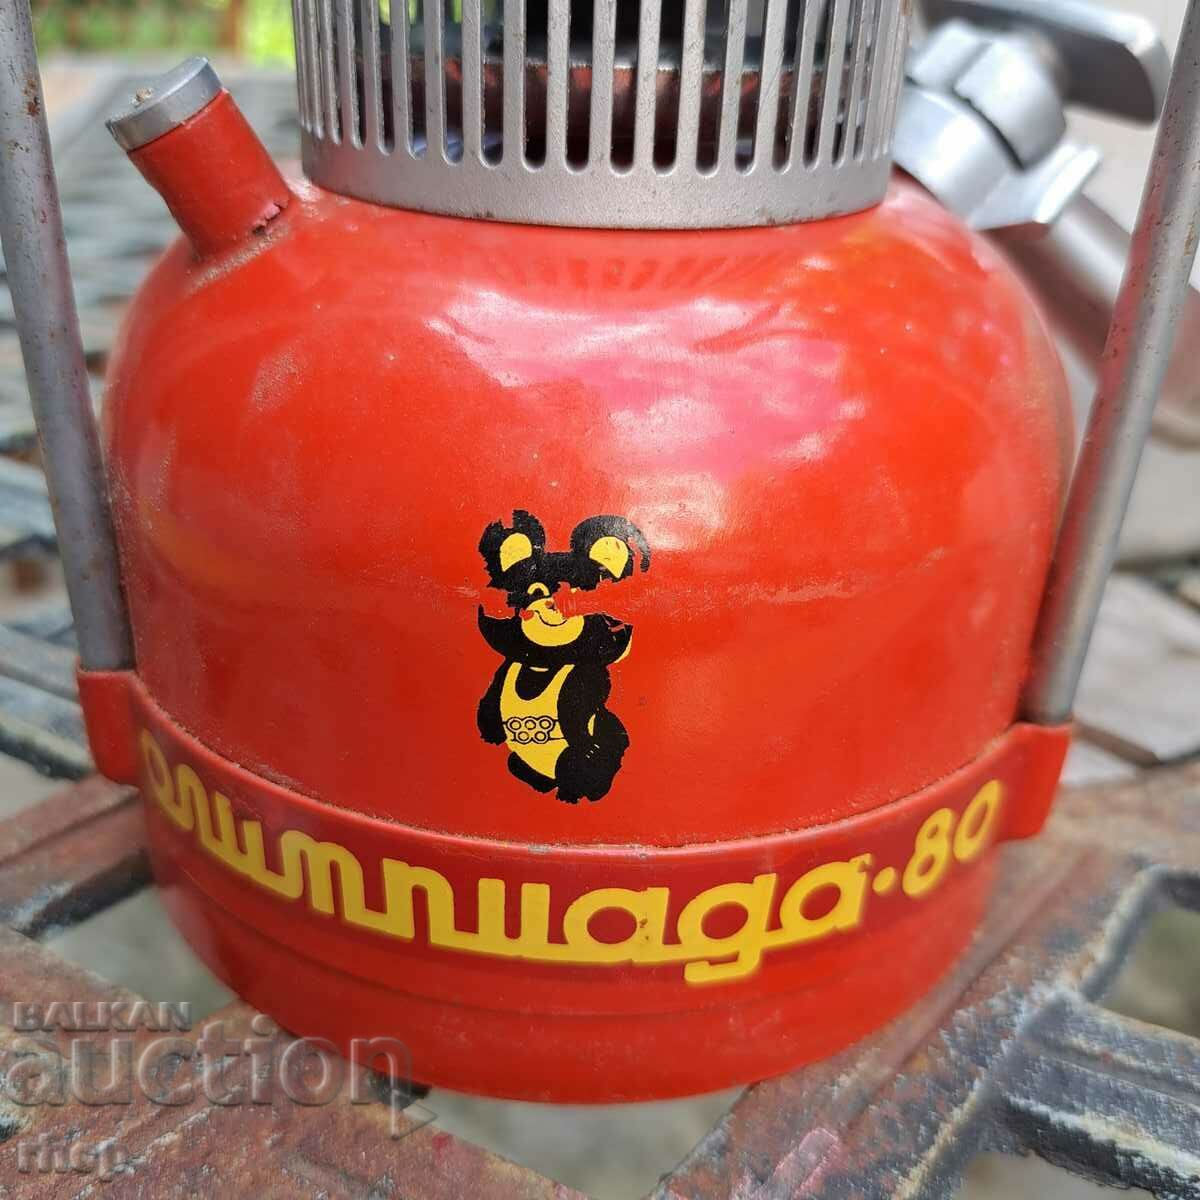 Bumblebee 1 old Soviet Olimpiysk gasoline stove primus stove